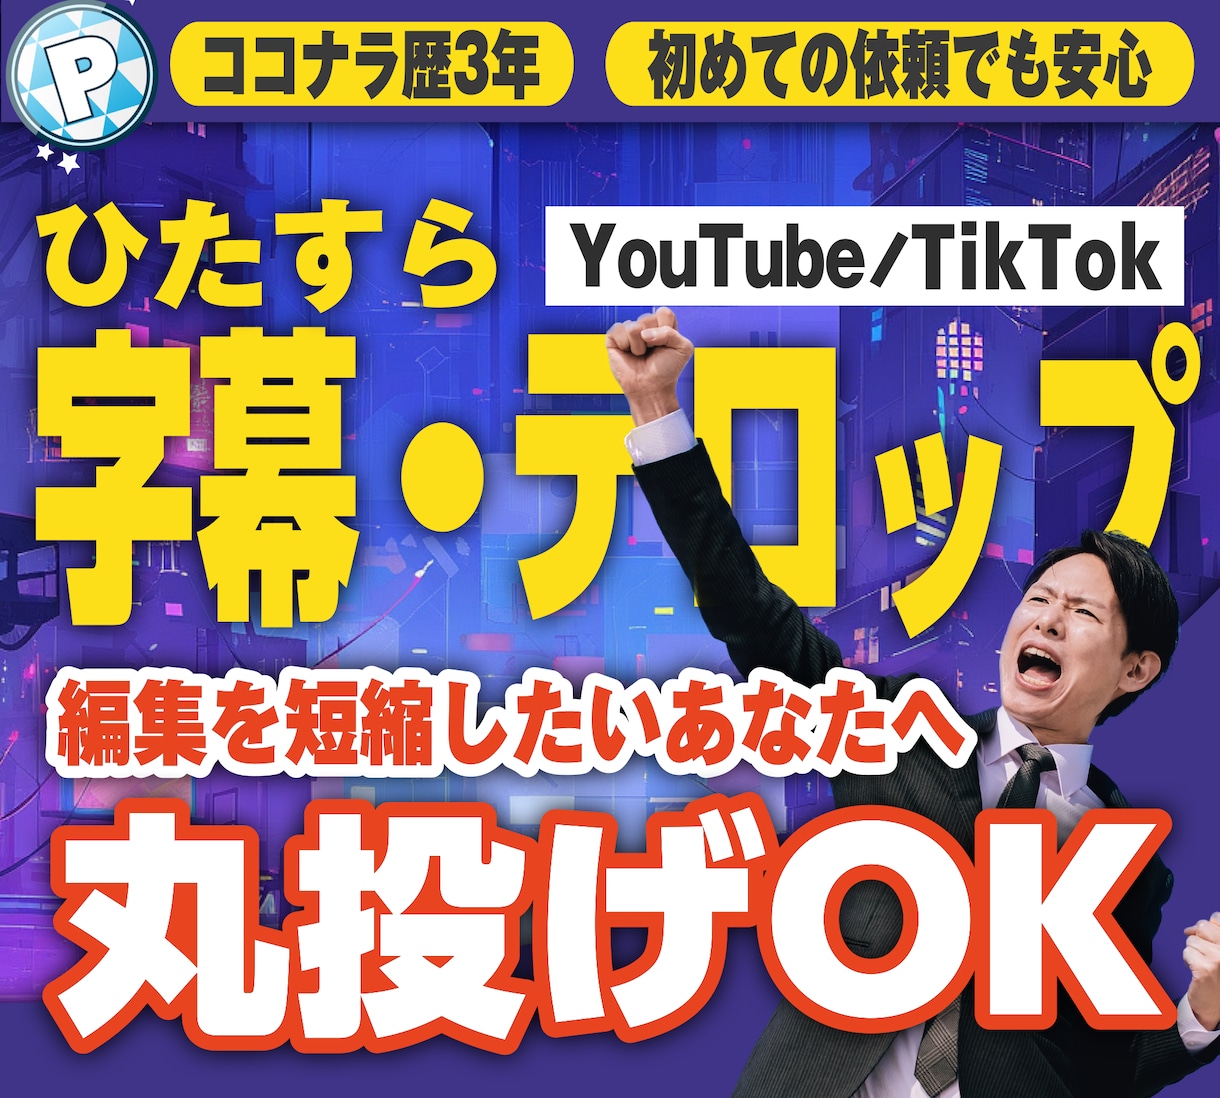 💬Coconara｜Create subtitles for YouTube/TikTok videos Inazo Gimmick @Video editing/Caricature 5.0…